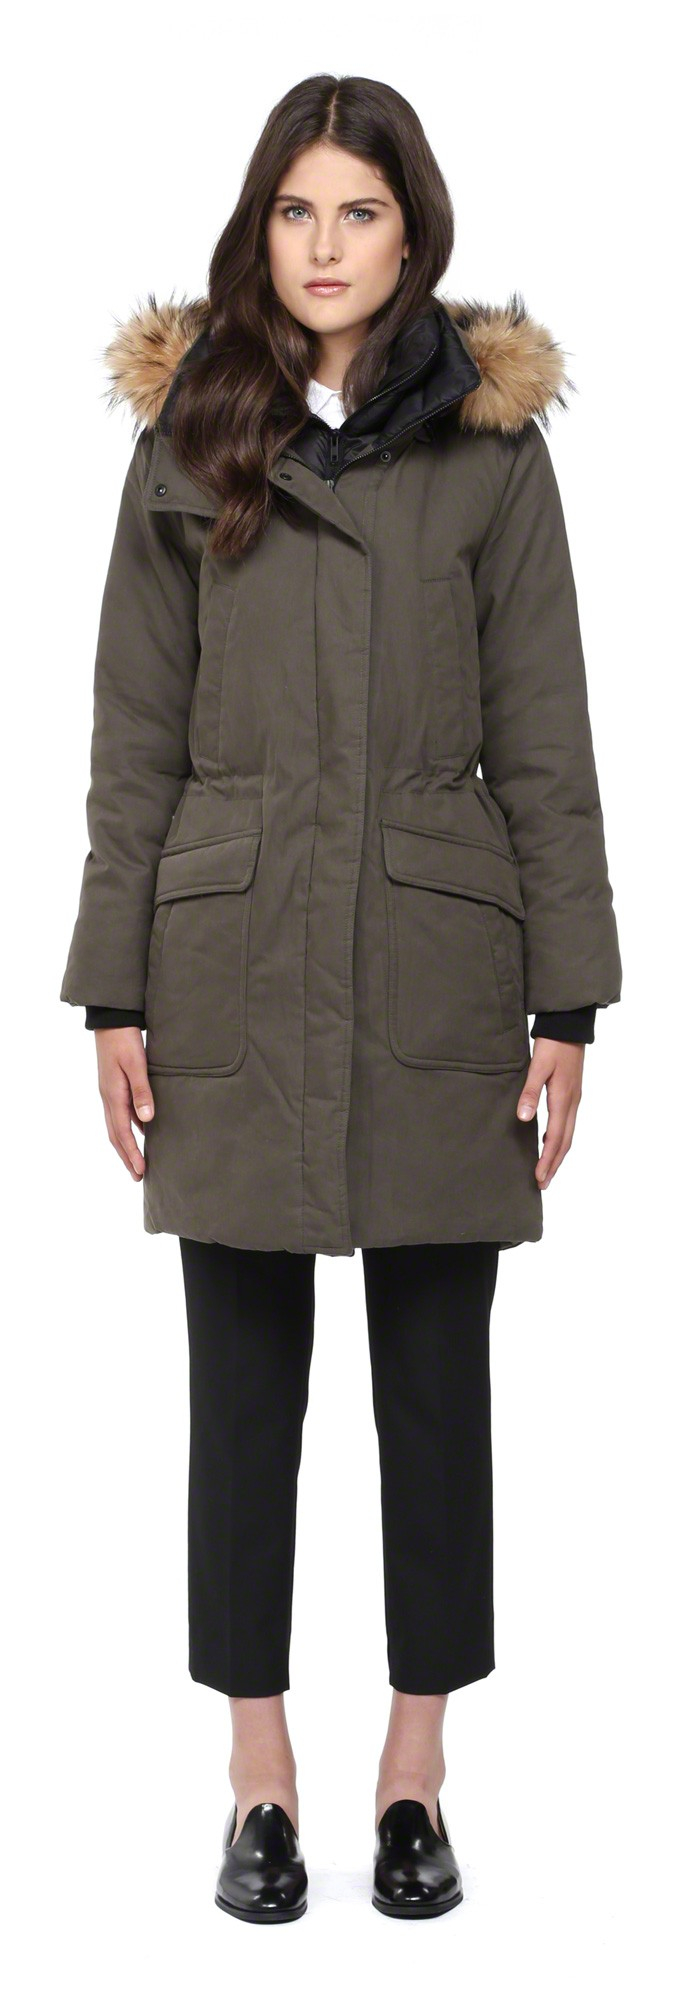 Soia & kyo Edita Military Winter Parka Coat With Fur Hood in Gray | Lyst